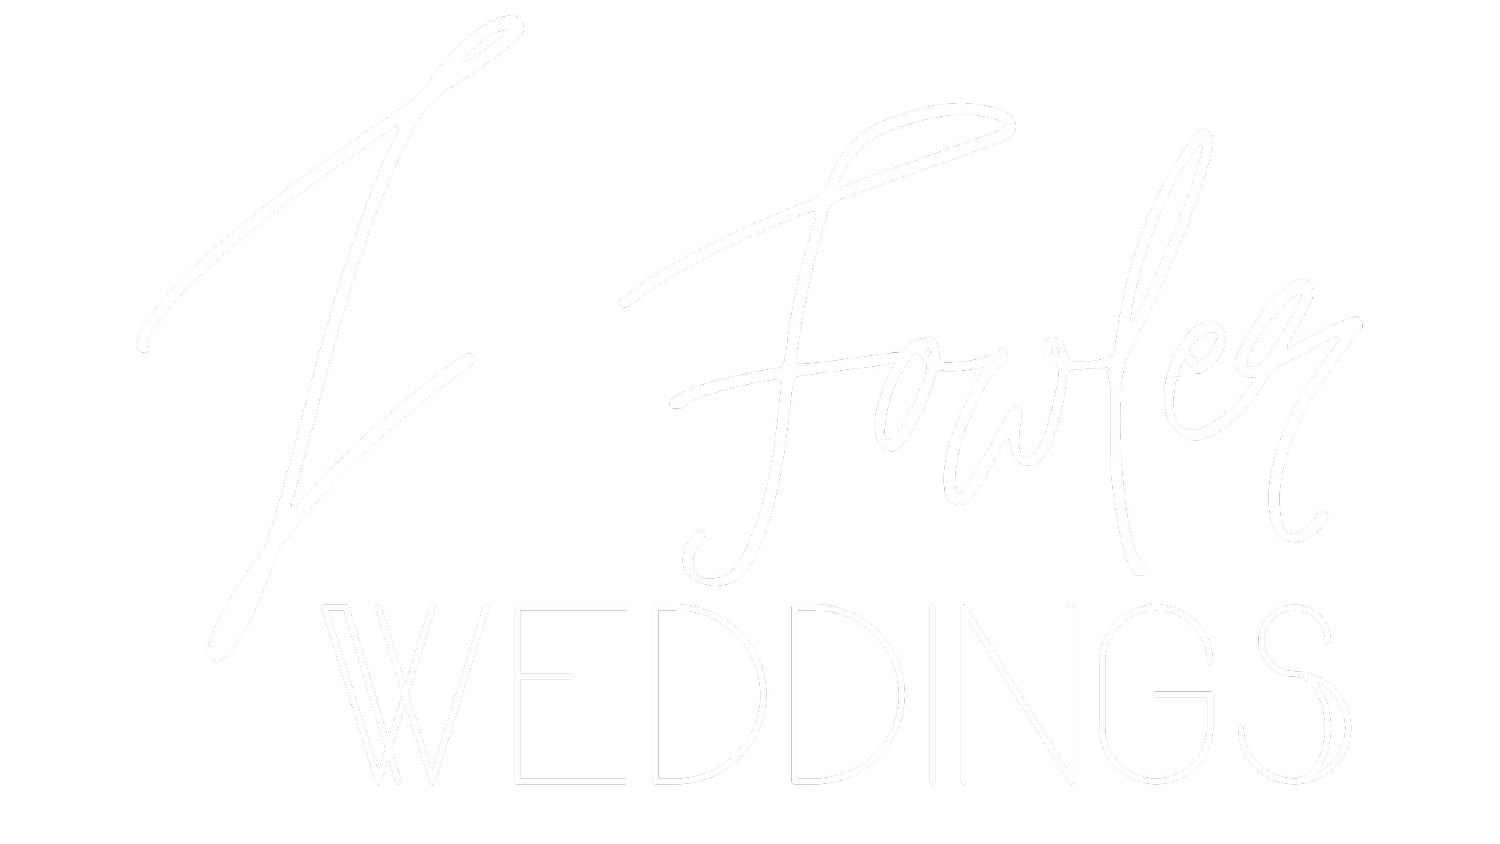 J Fowler Weddings